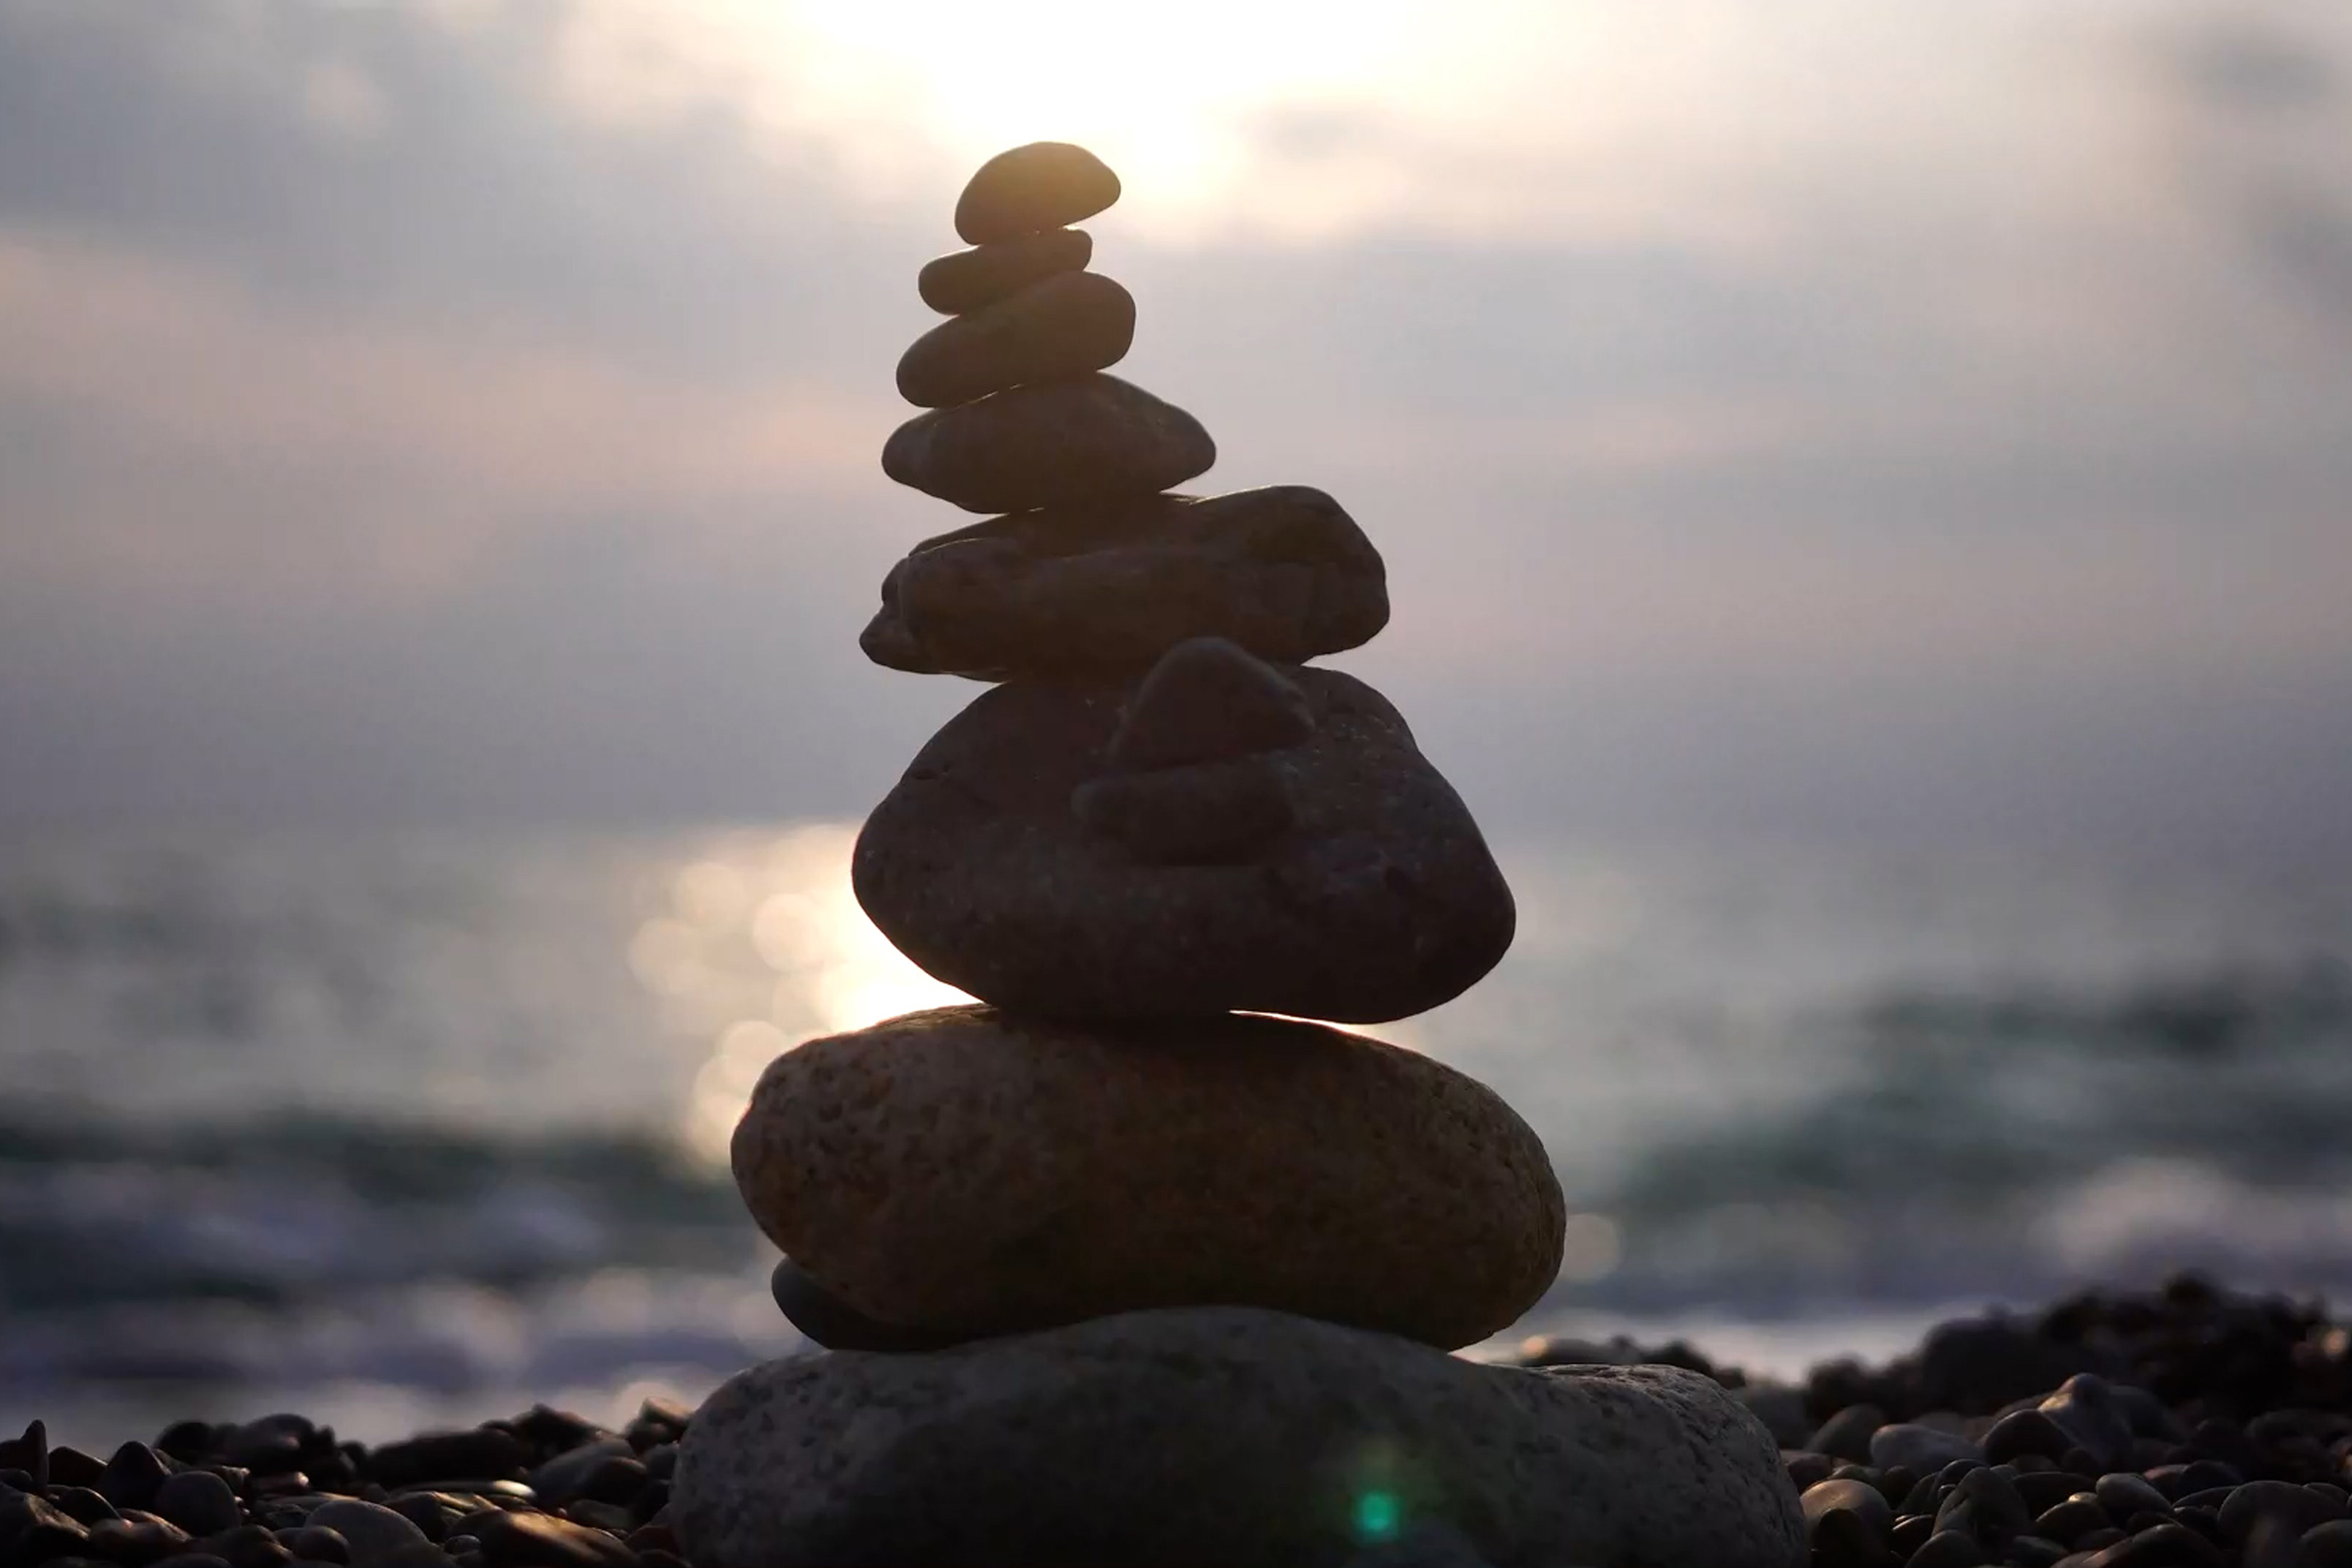 Balanced pebbles pyramid on the beach on cloudy day